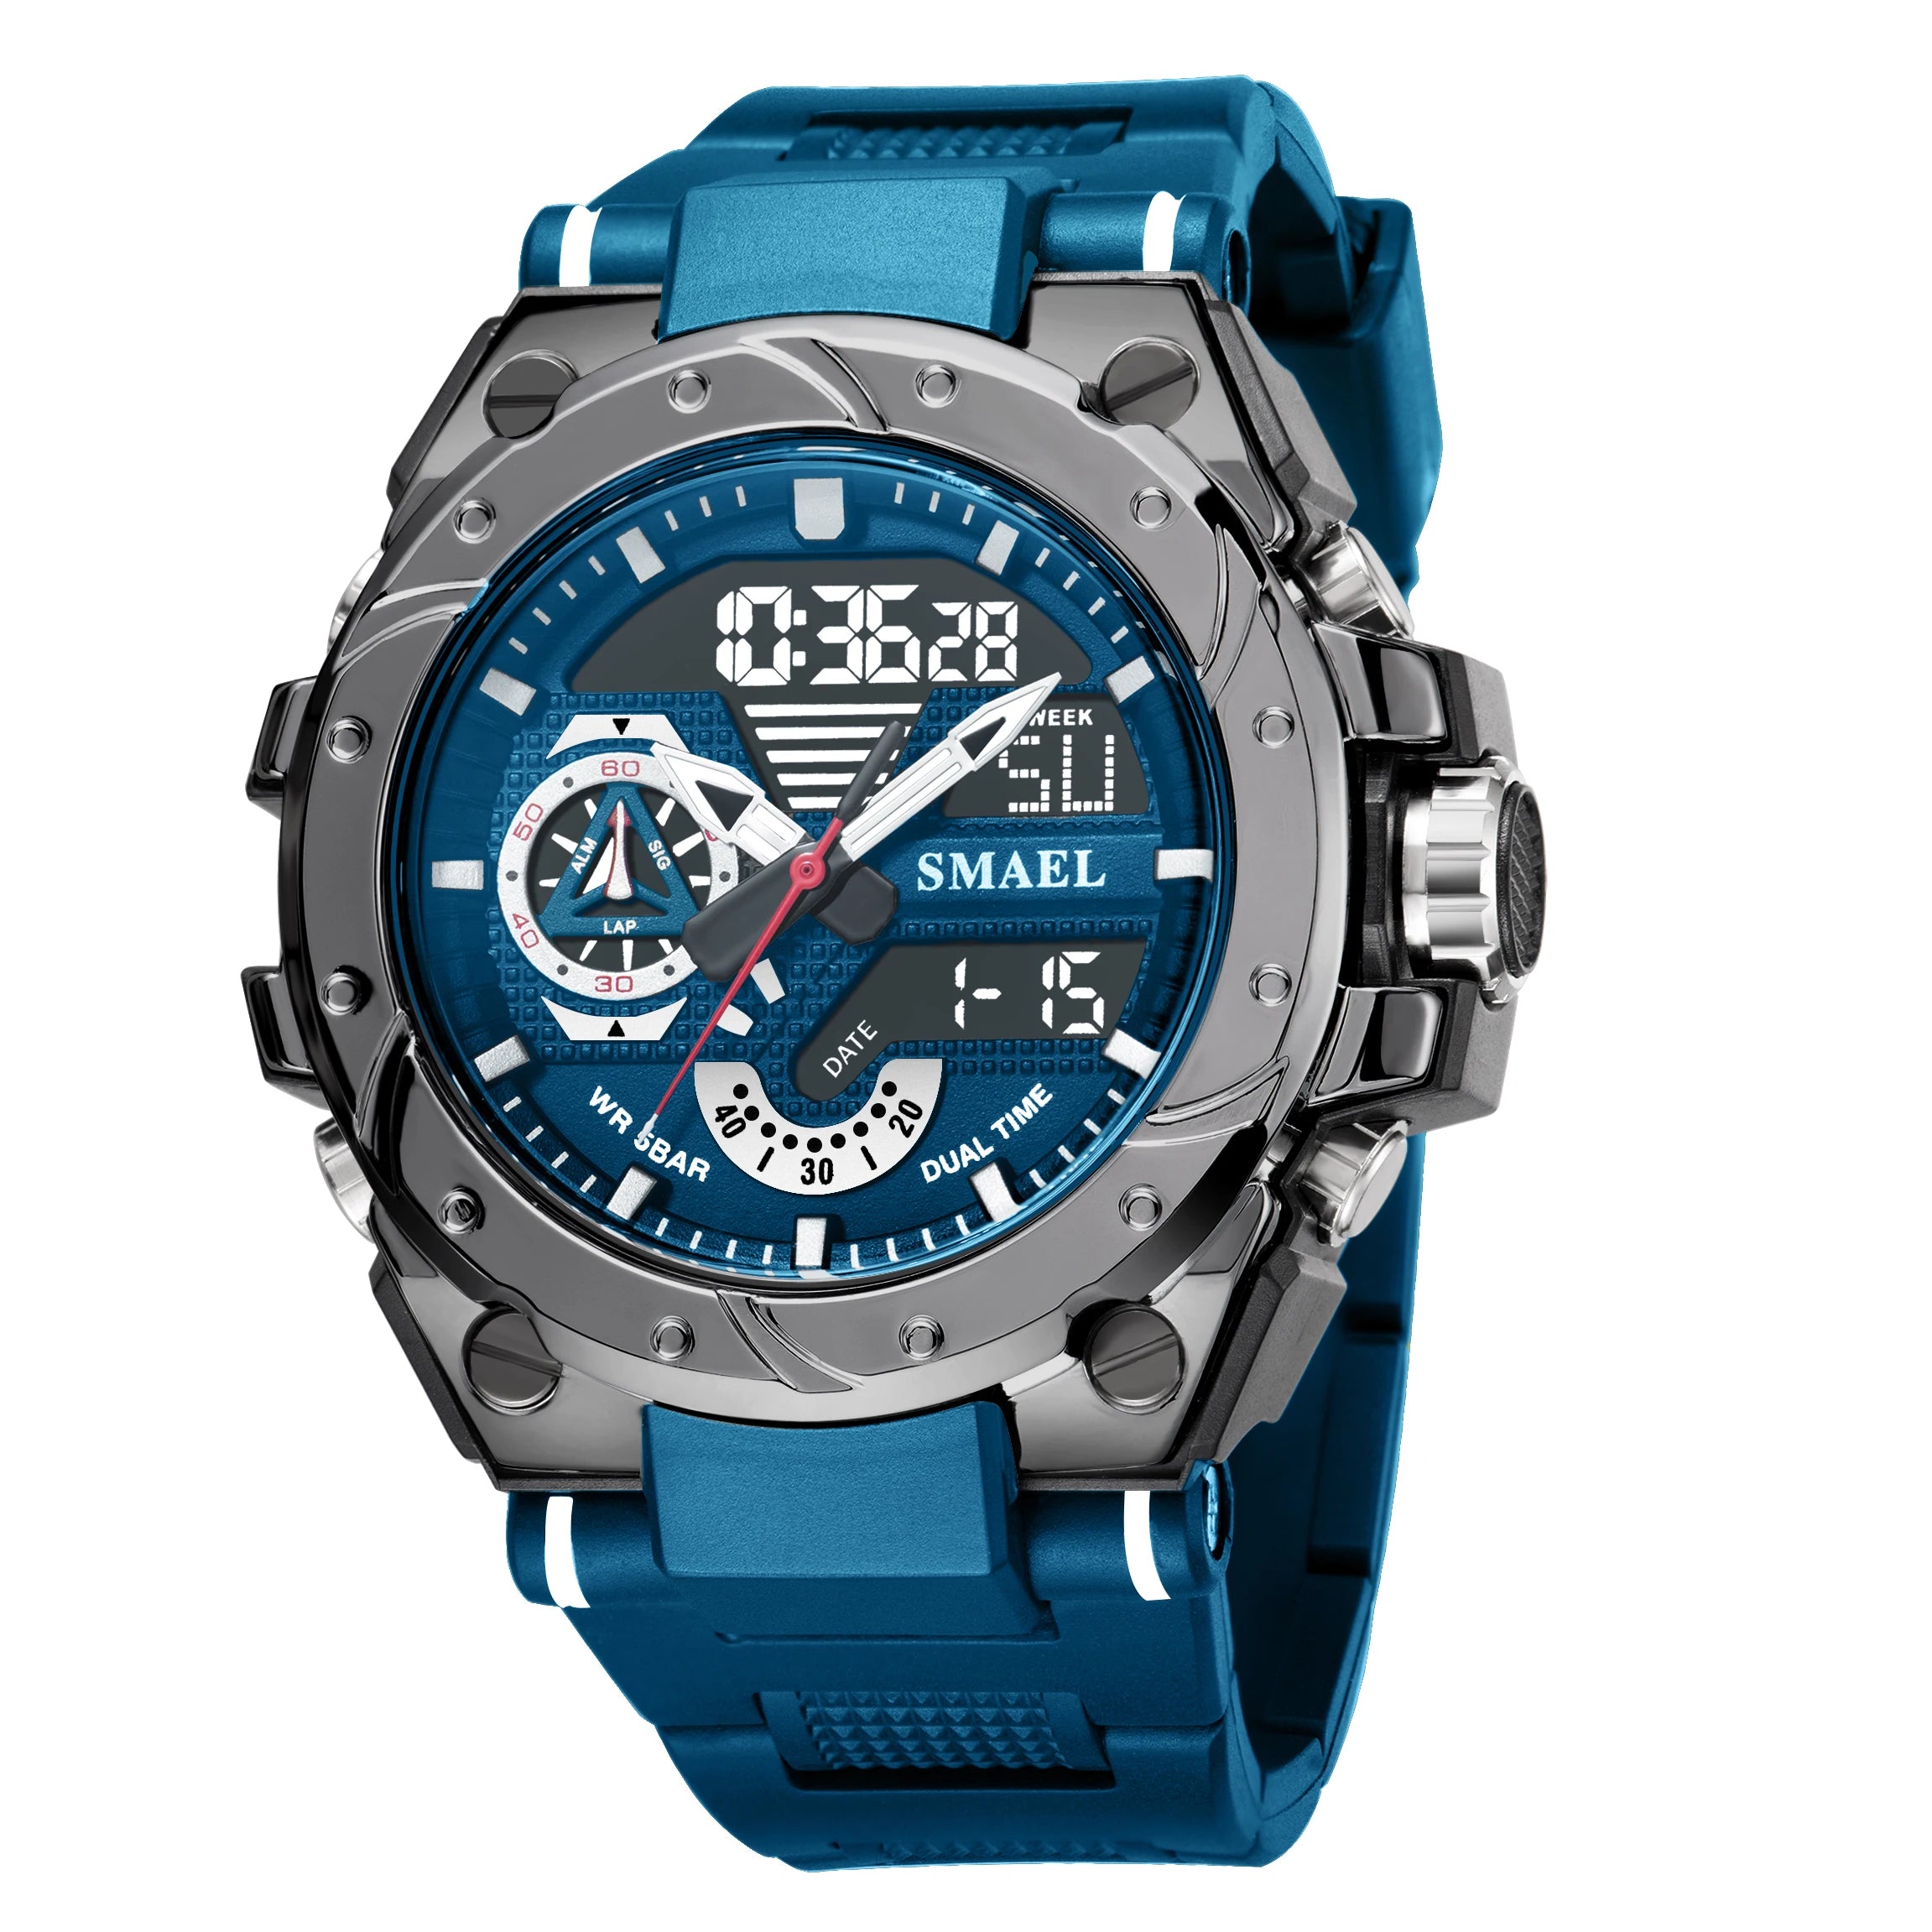 KIMLUD, Quartz Watch For Men SMAEL Wristwatches Watcholorful Red Bracelet 50M Waterproof Alarm Clock Analog Digitals 8060 Sport Watches, BLUE / China, KIMLUD Women's Clothes